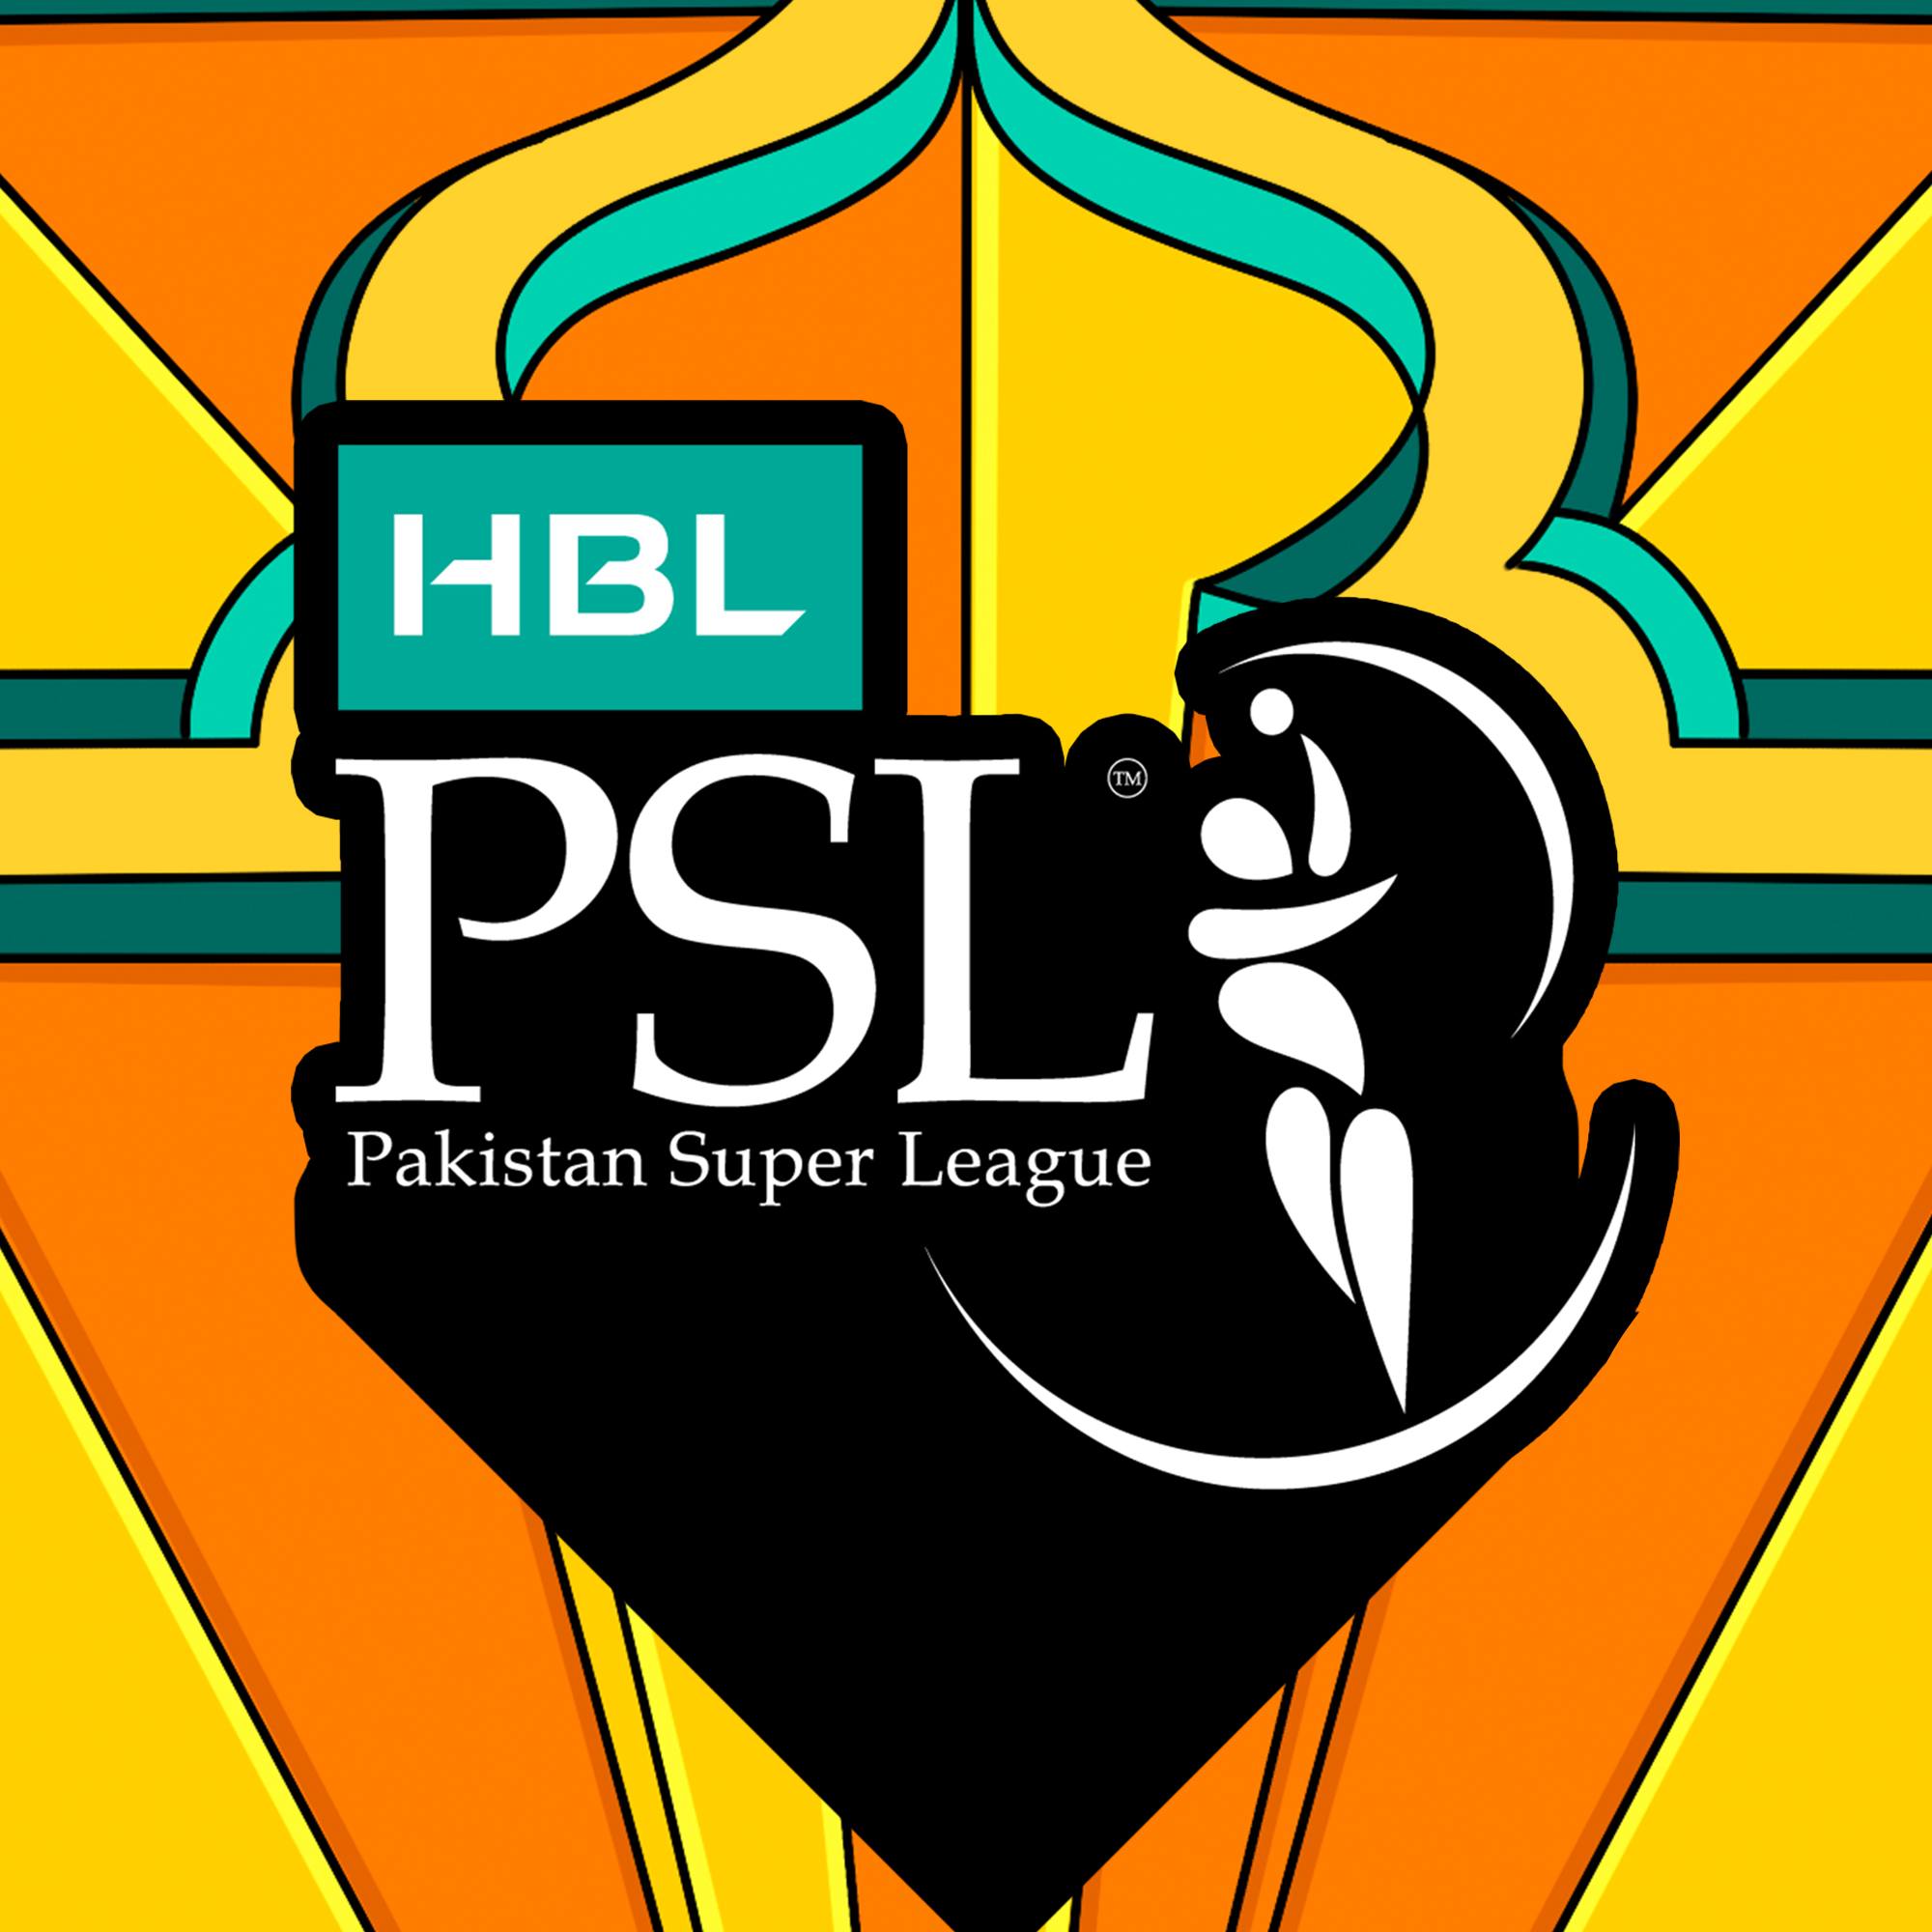 Pakistan Super League (PSL) has taken the lead in shaping the future of Pakistani cricket